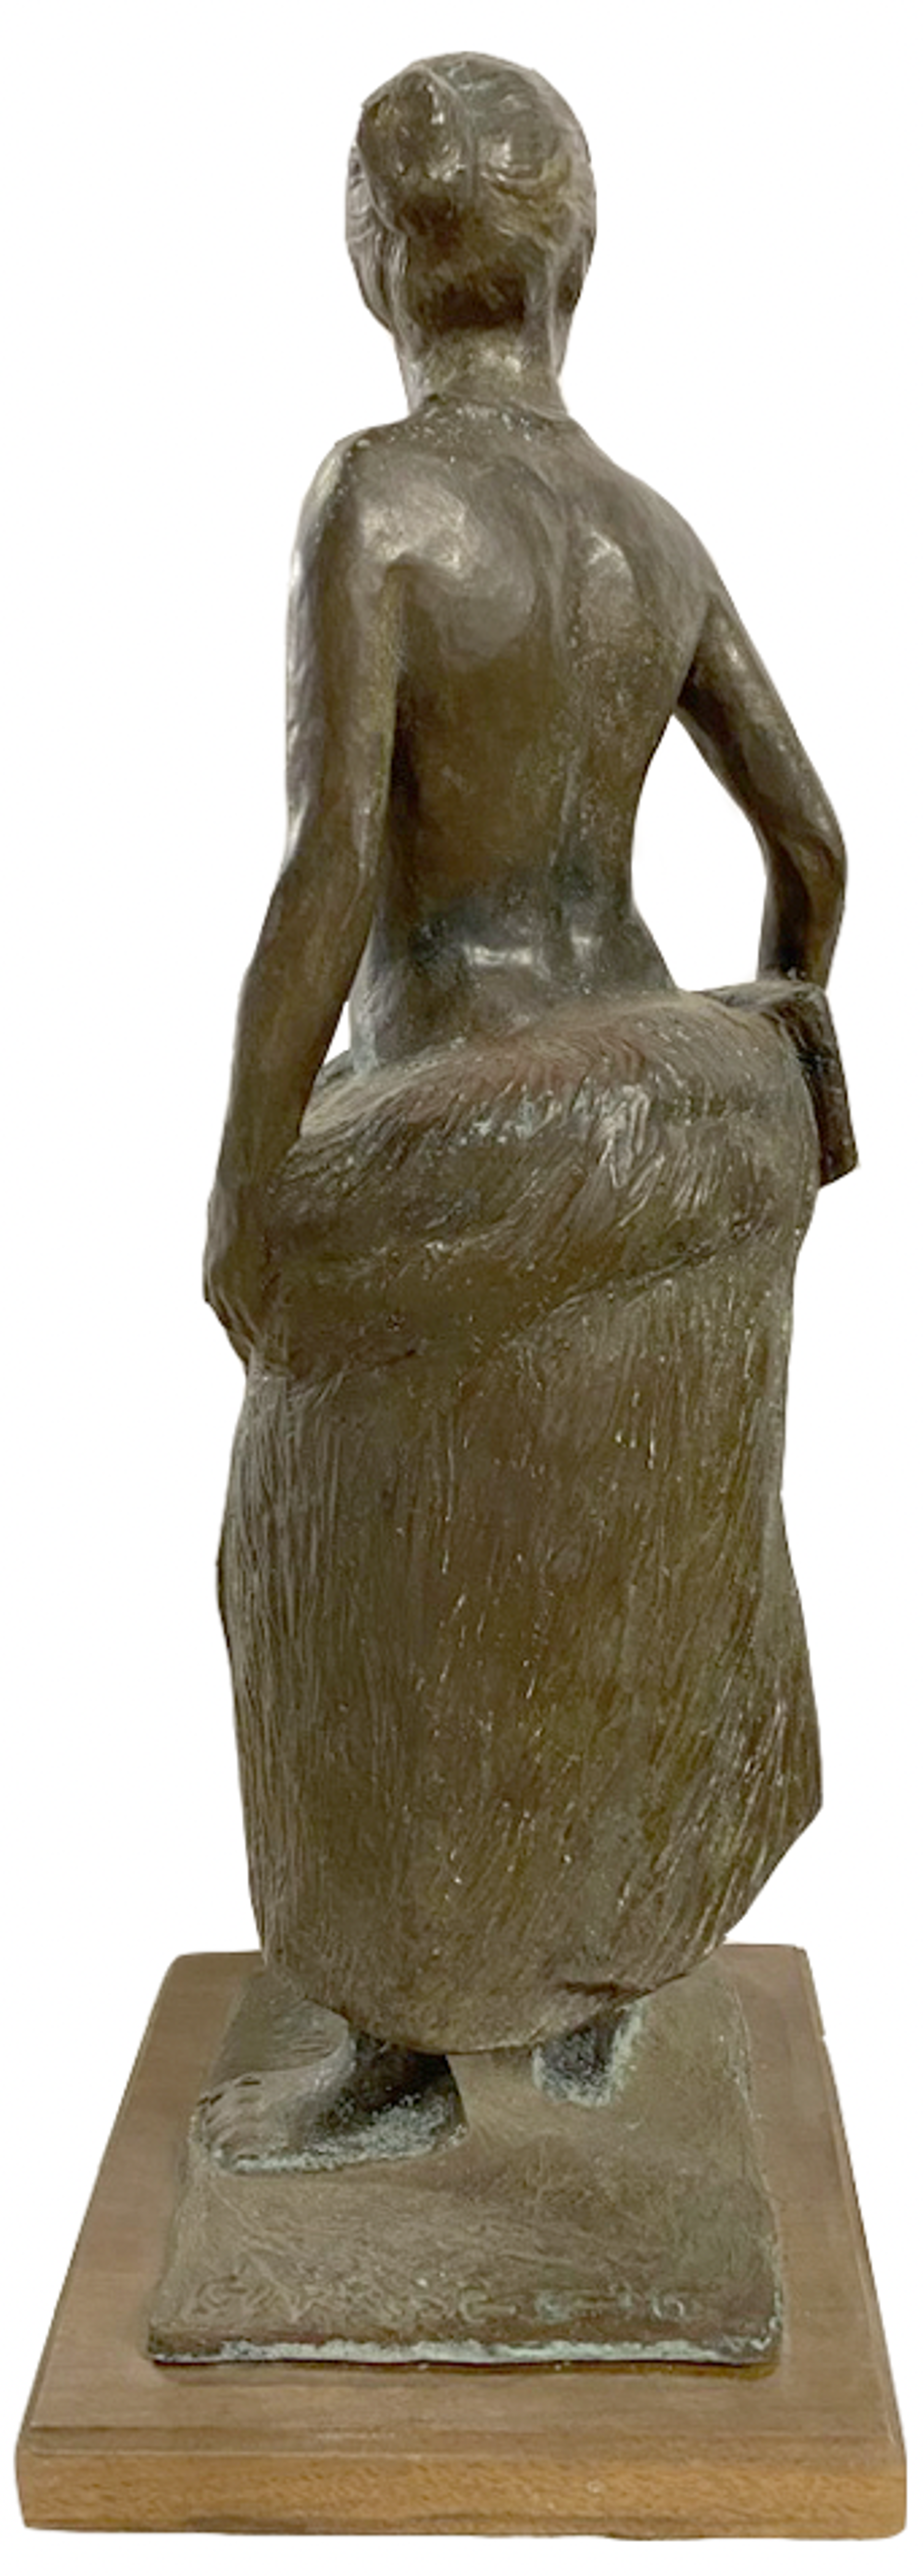 Woman in Hula Skirt by A. LaMoyne Garside